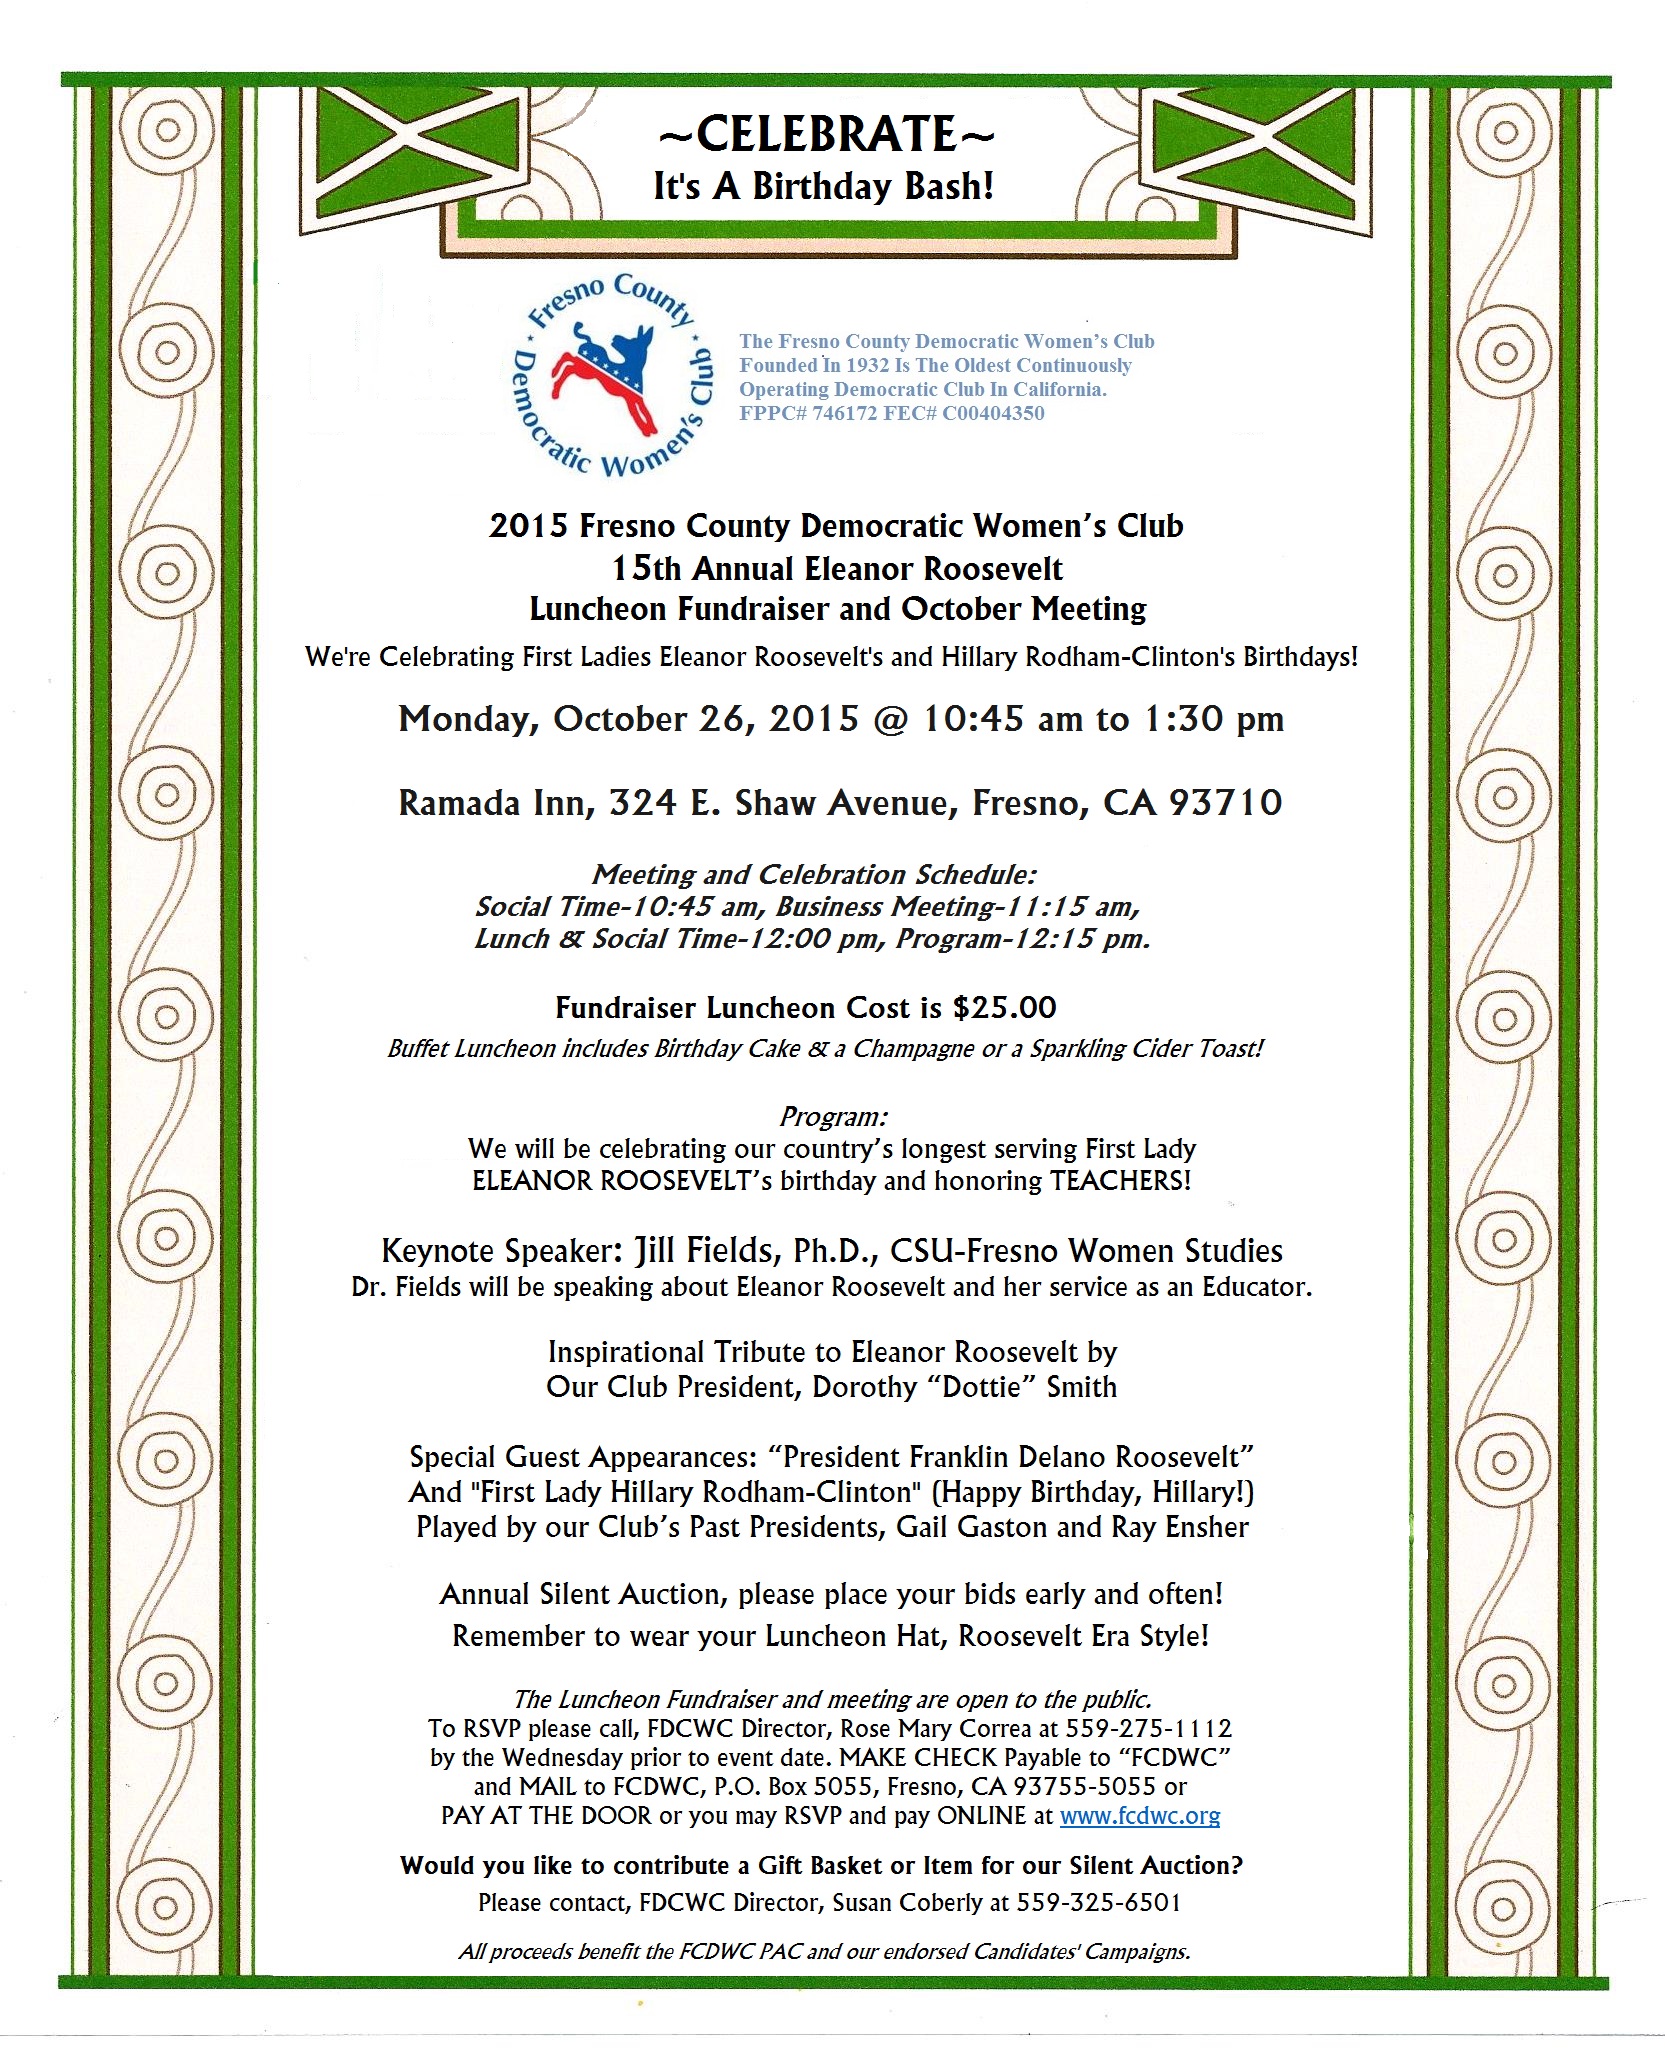 15th Annual Fresno County Democratic Women’s Club Eleanor Roosevelt Luncheon Monday, Oct. 26